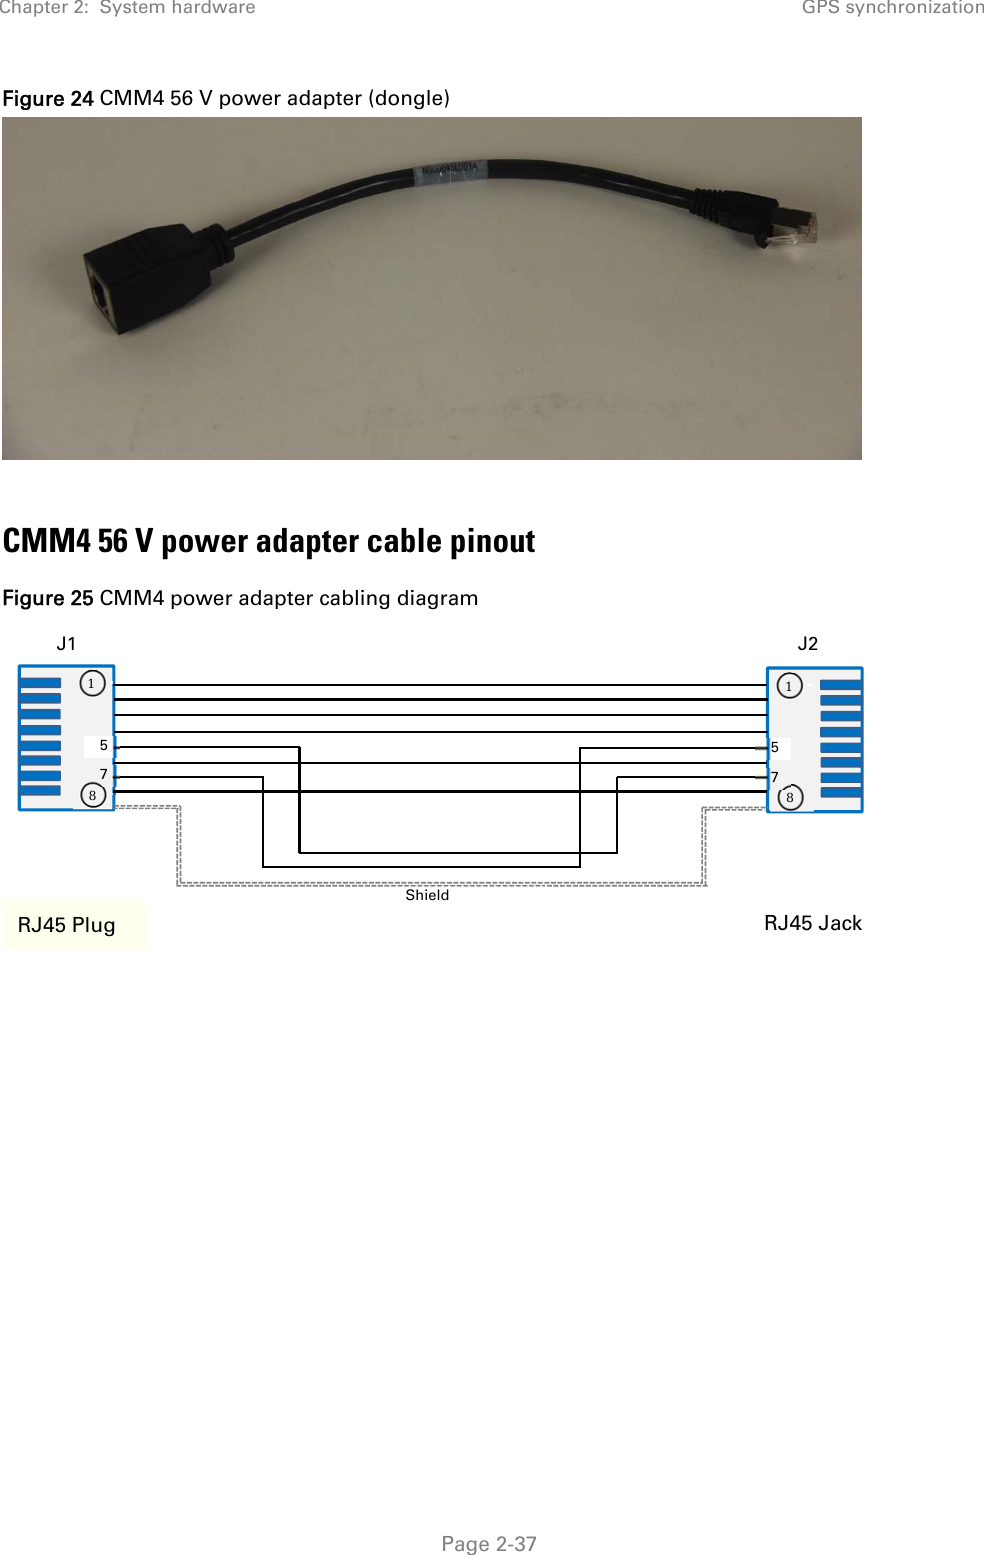 Chapter 2:  System hardware  GPS synchronization   Page 2-37 Figure 24 CMM4 56 V power adapter (dongle)   CMM4 56 V power adapter cable pinout Figure 25 CMM4 power adapter cabling diagram  1 8 1 8 J1  J2 RJ45 Plug  RJ45 Jack 5 7 5 7 Shield 